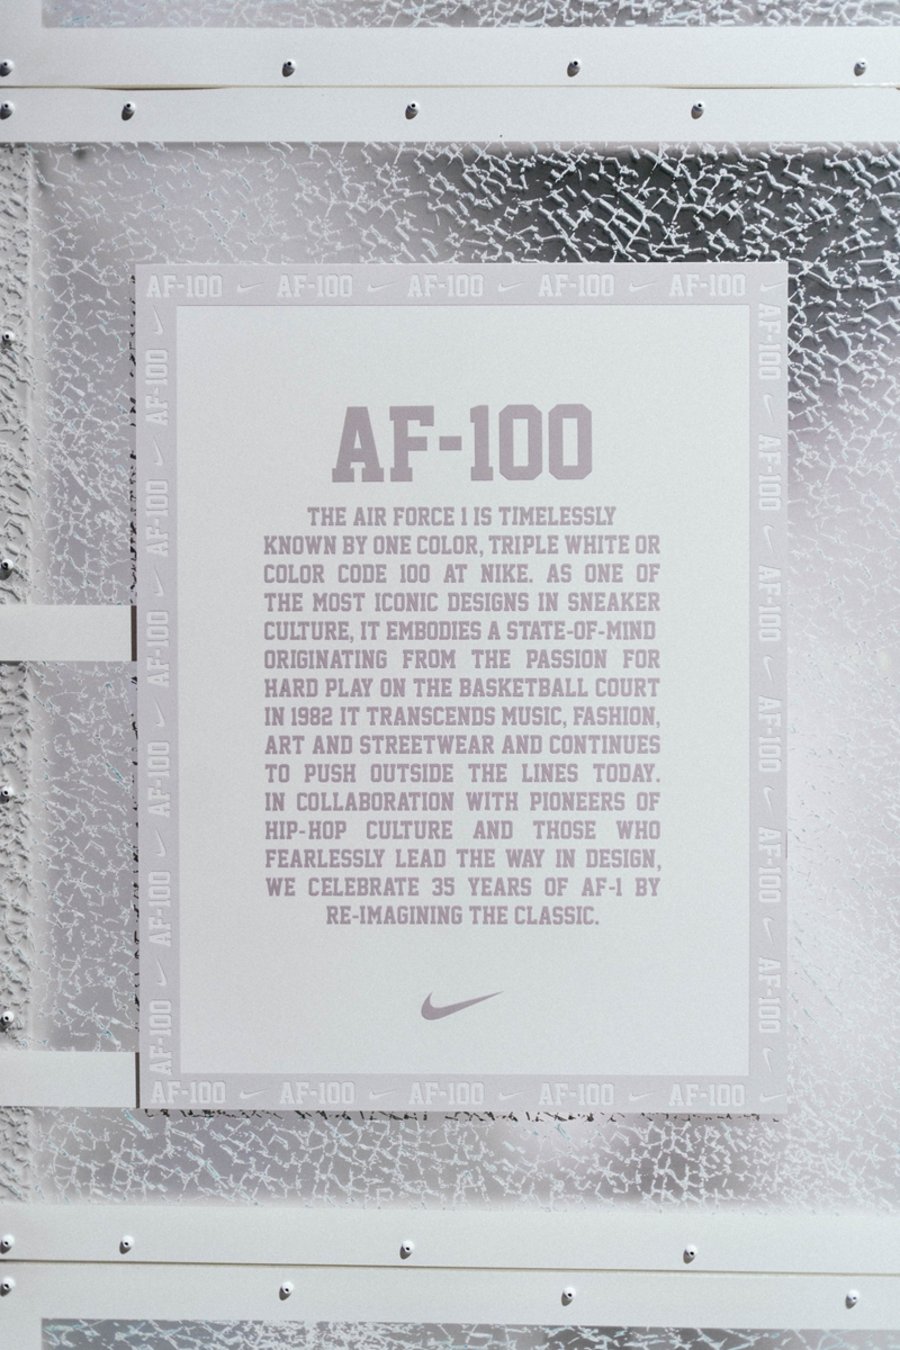 Nike,Air Force 1,ComplexCon  大咖云集！AF-100 系列惊艳亮相 ComplexCon